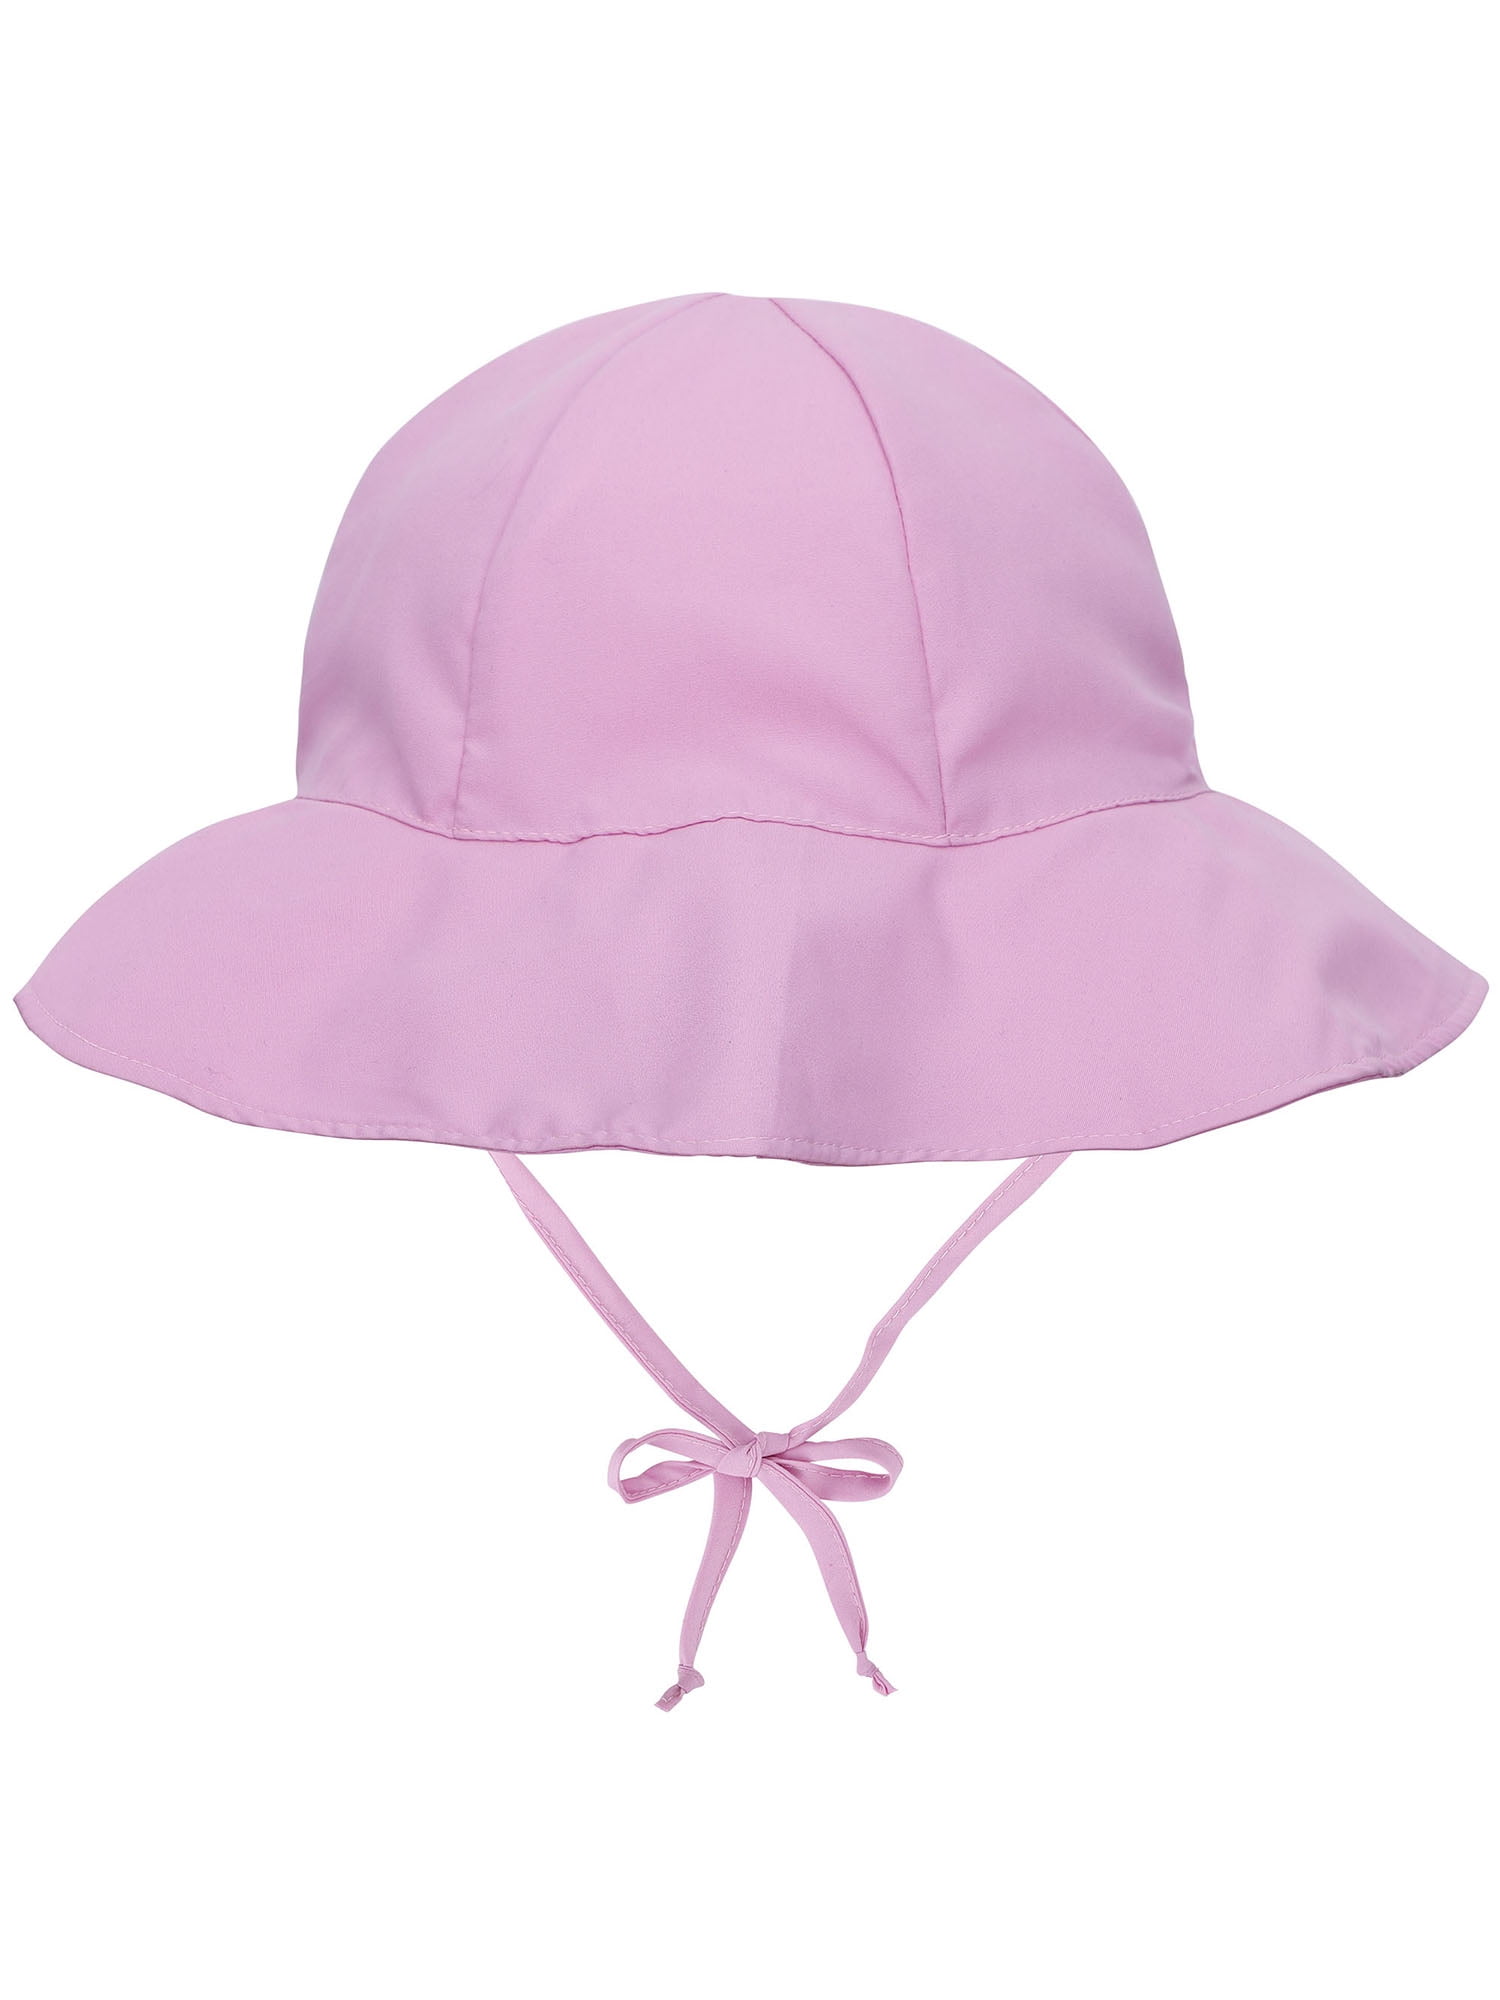 Boys Girls Beach Hat Wide Brim Baby Sun Hat Breathable Summer Play Hat EzonYanGo Baby Fisherman Hat Sun Hat UPF 50